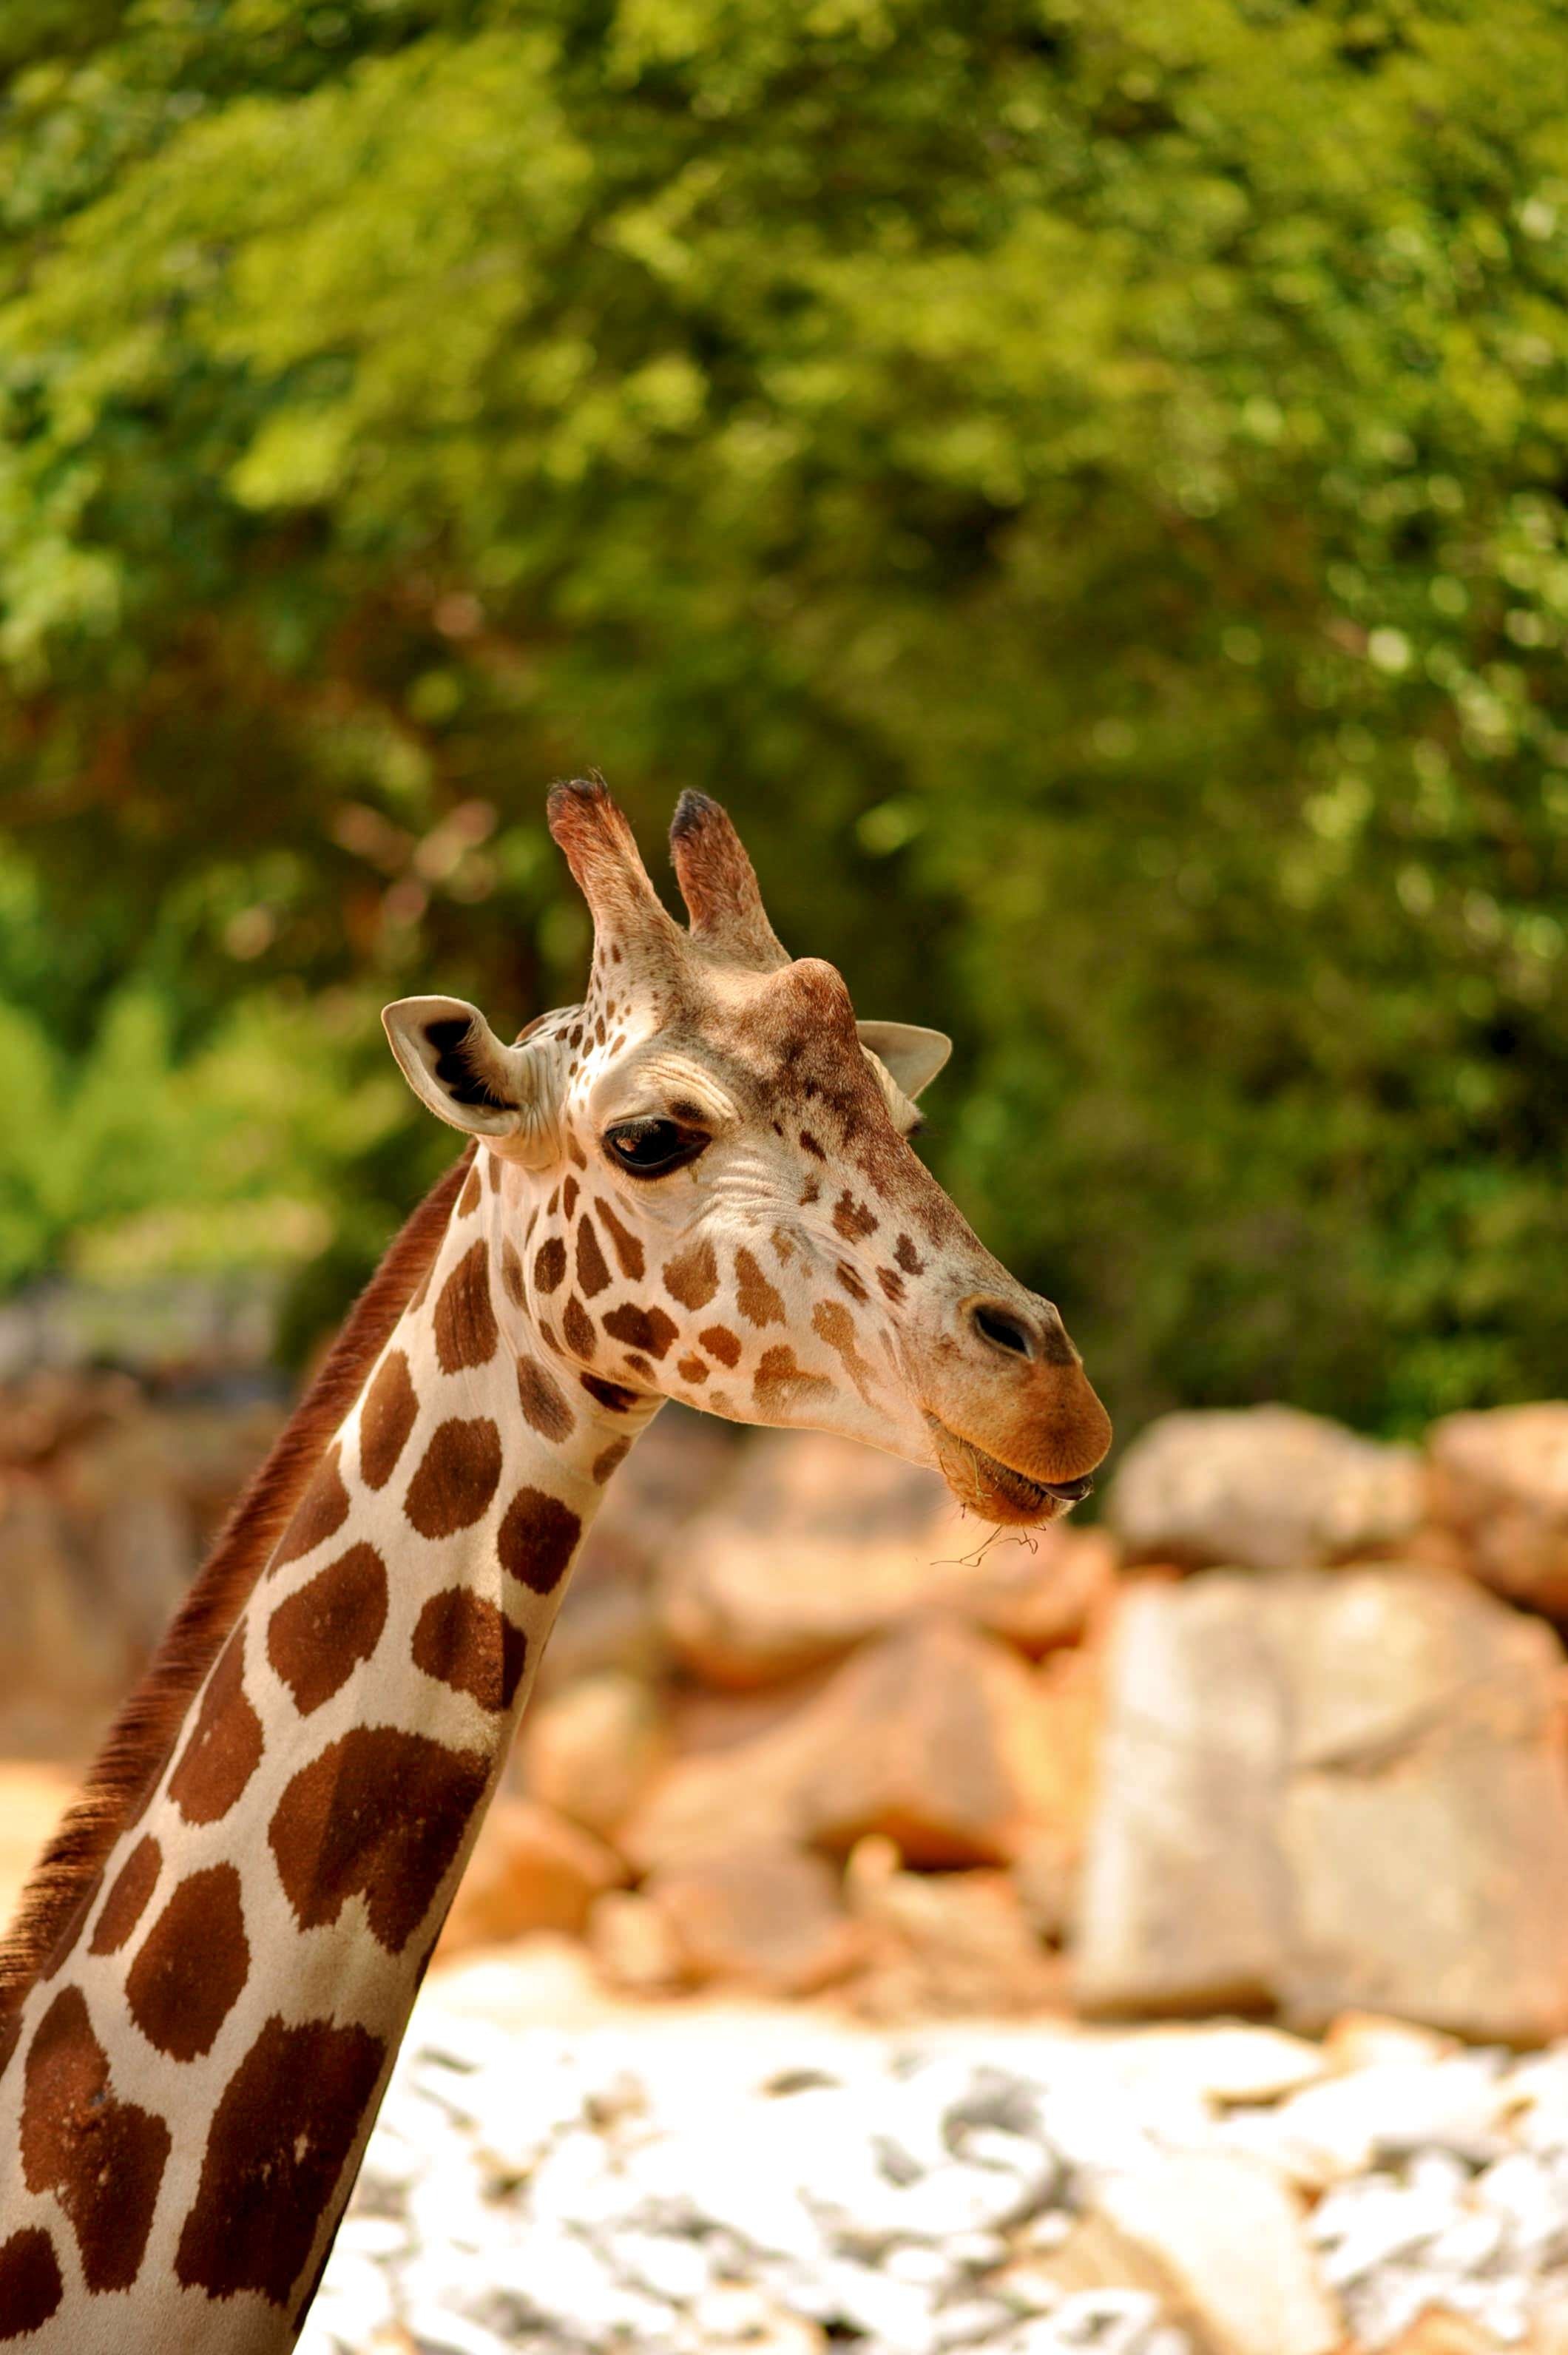 Giraffe, Wildlife, Animal, Zoo, African, animal wildlife, animals in the wild